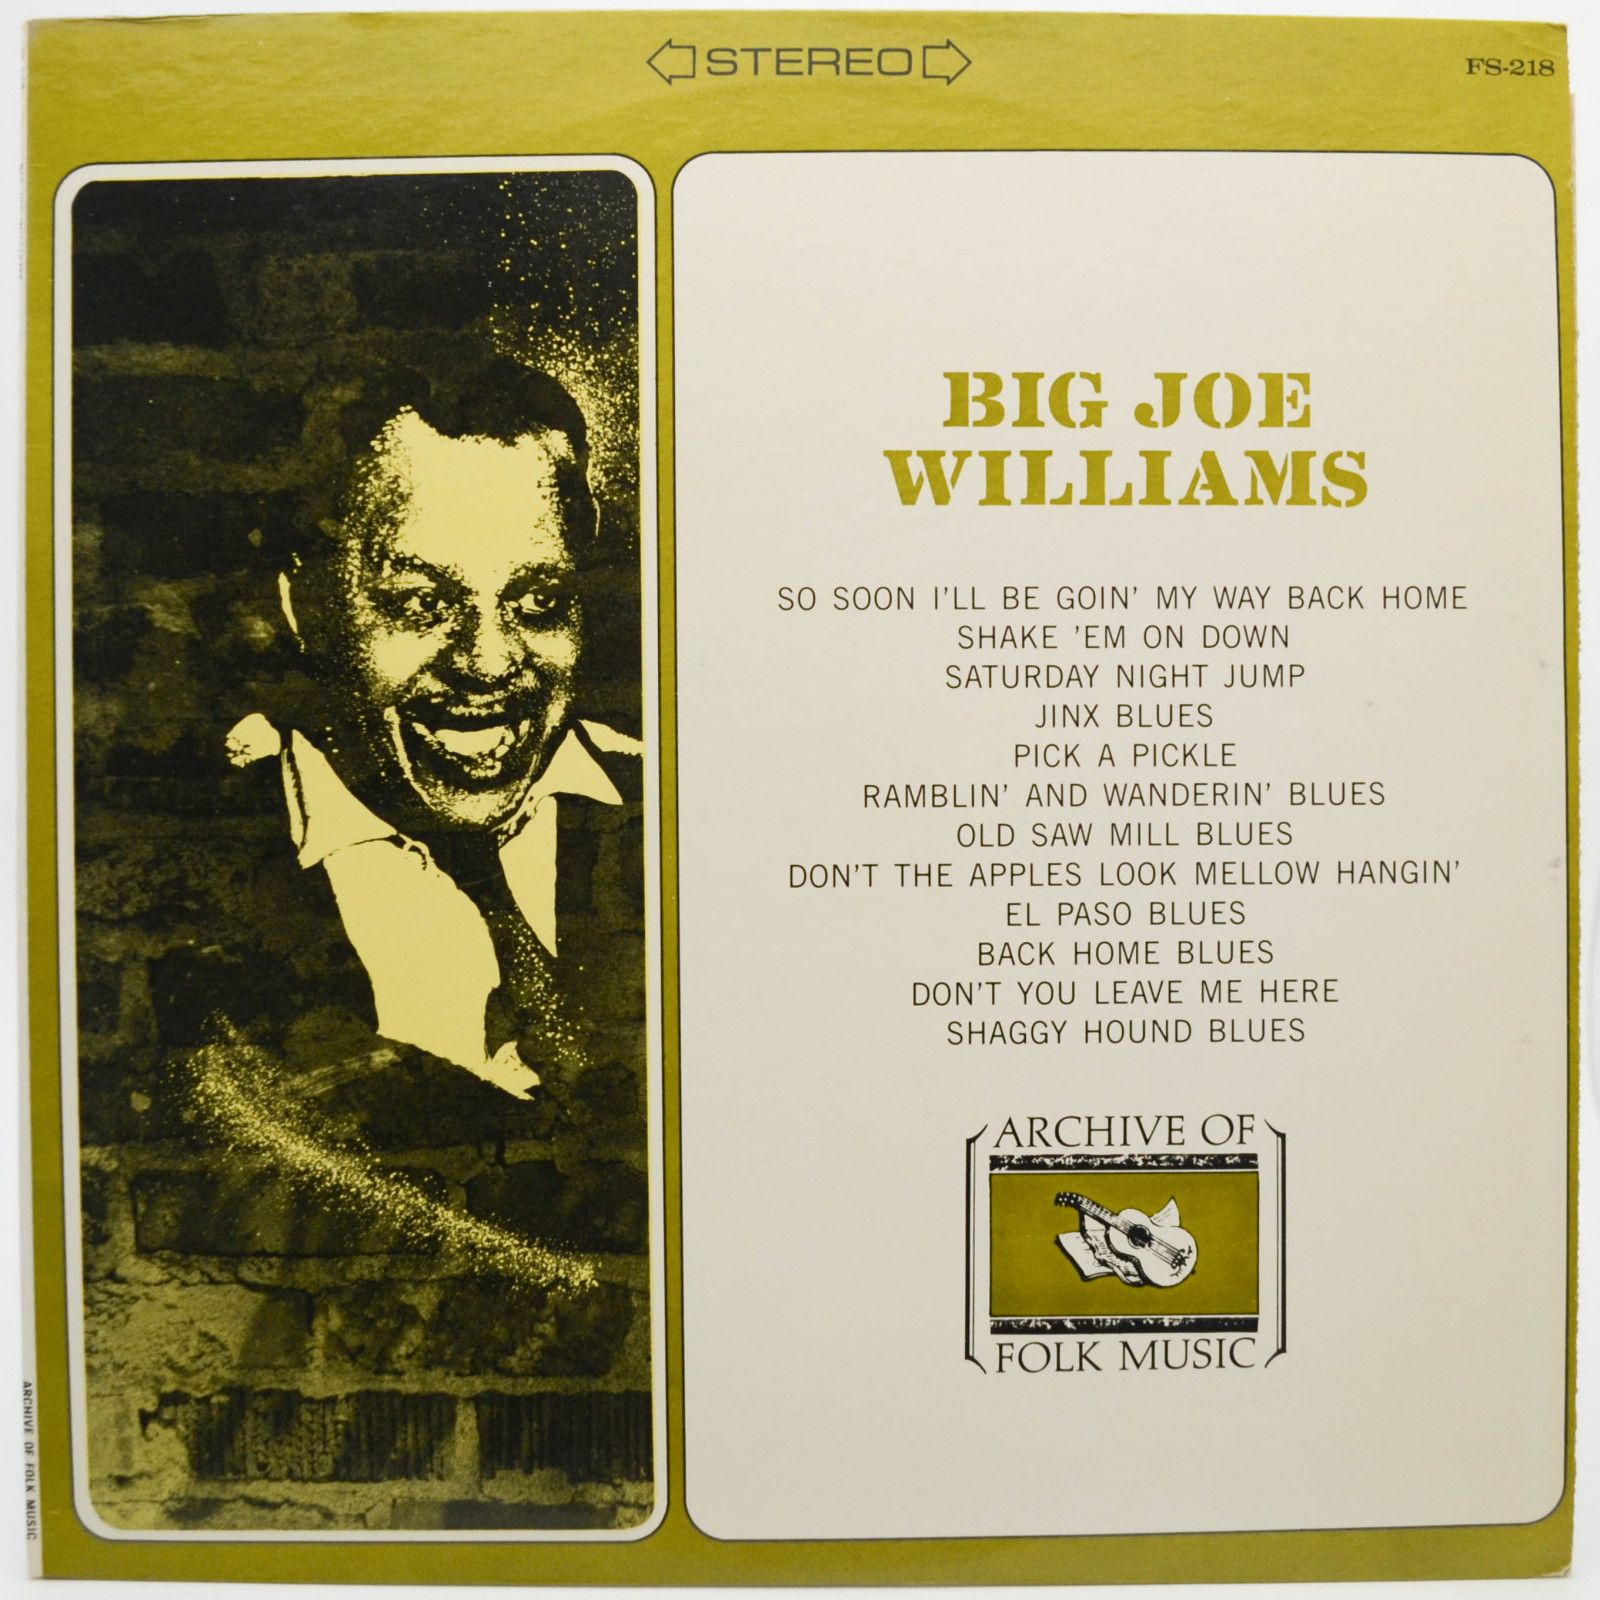 Big Joe Williams — Big Joe Williams, 1968